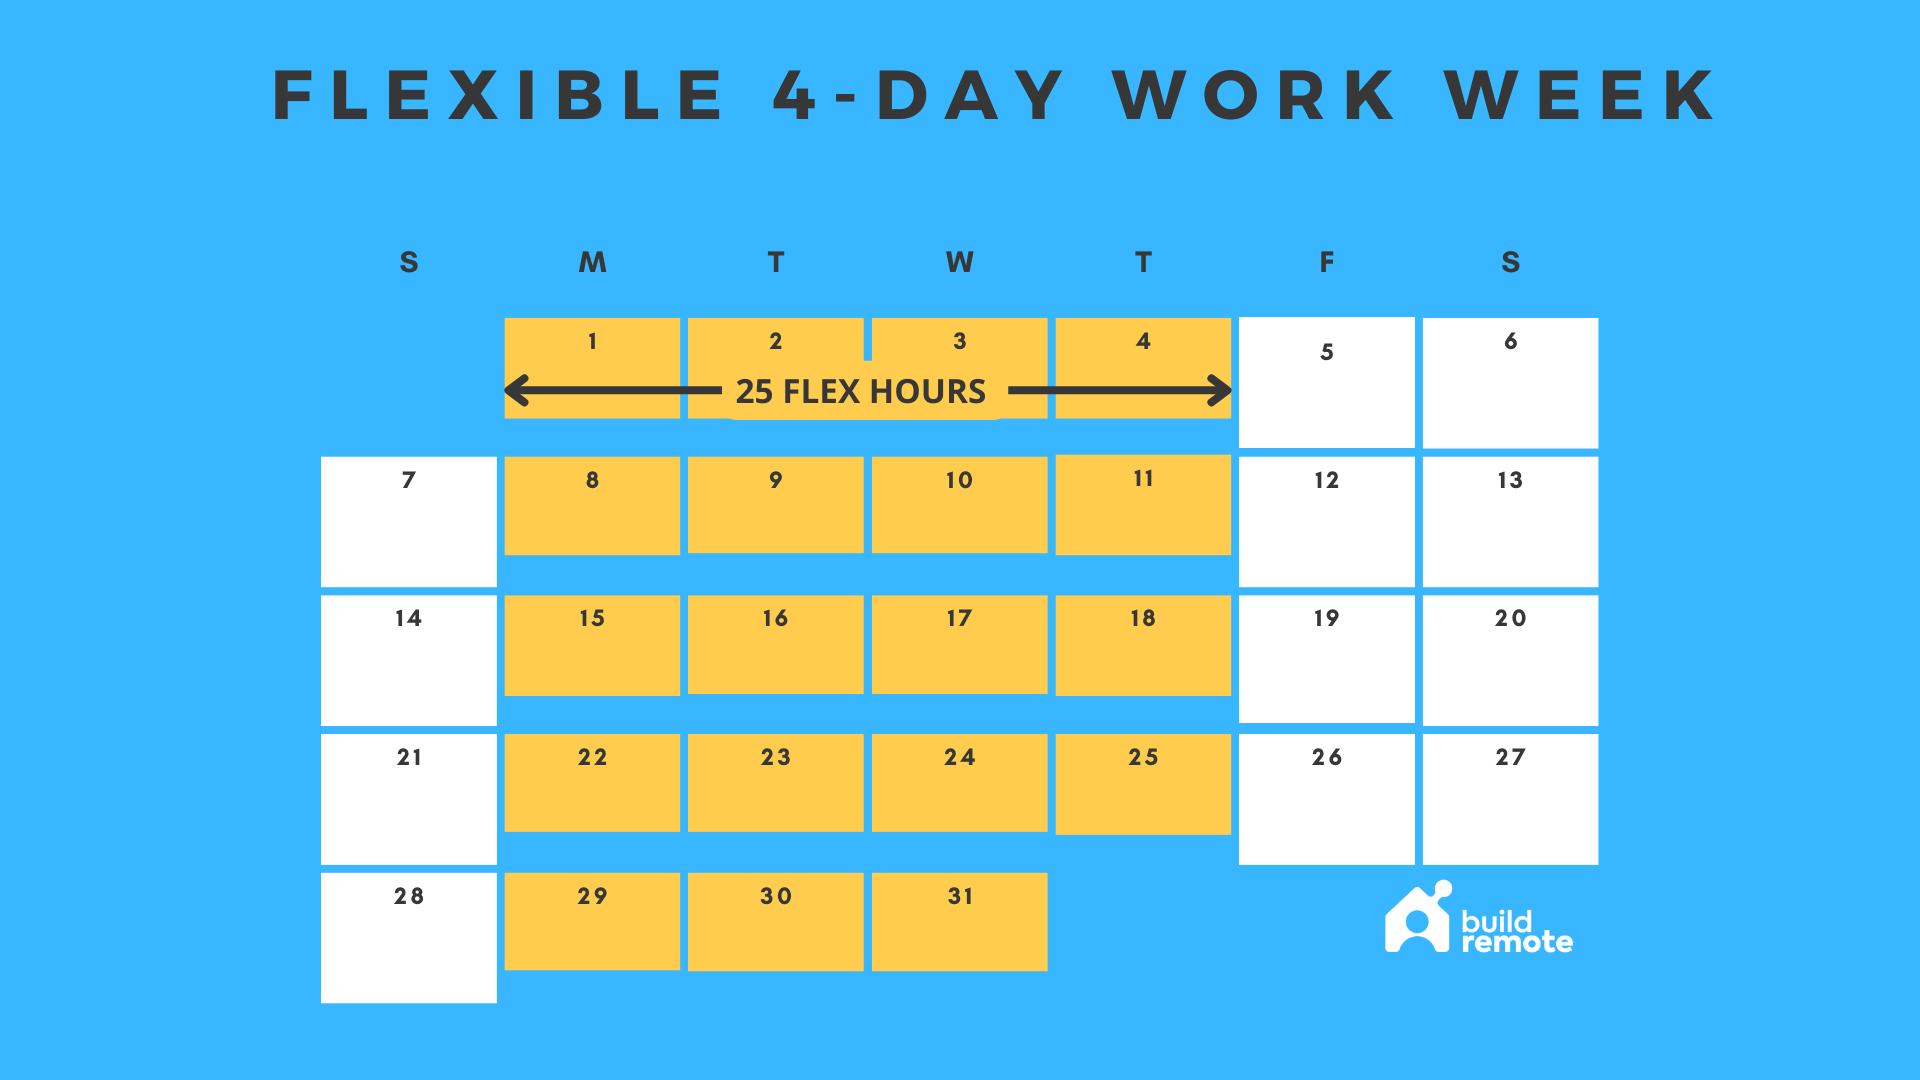 Flexible 4-day work week schedule